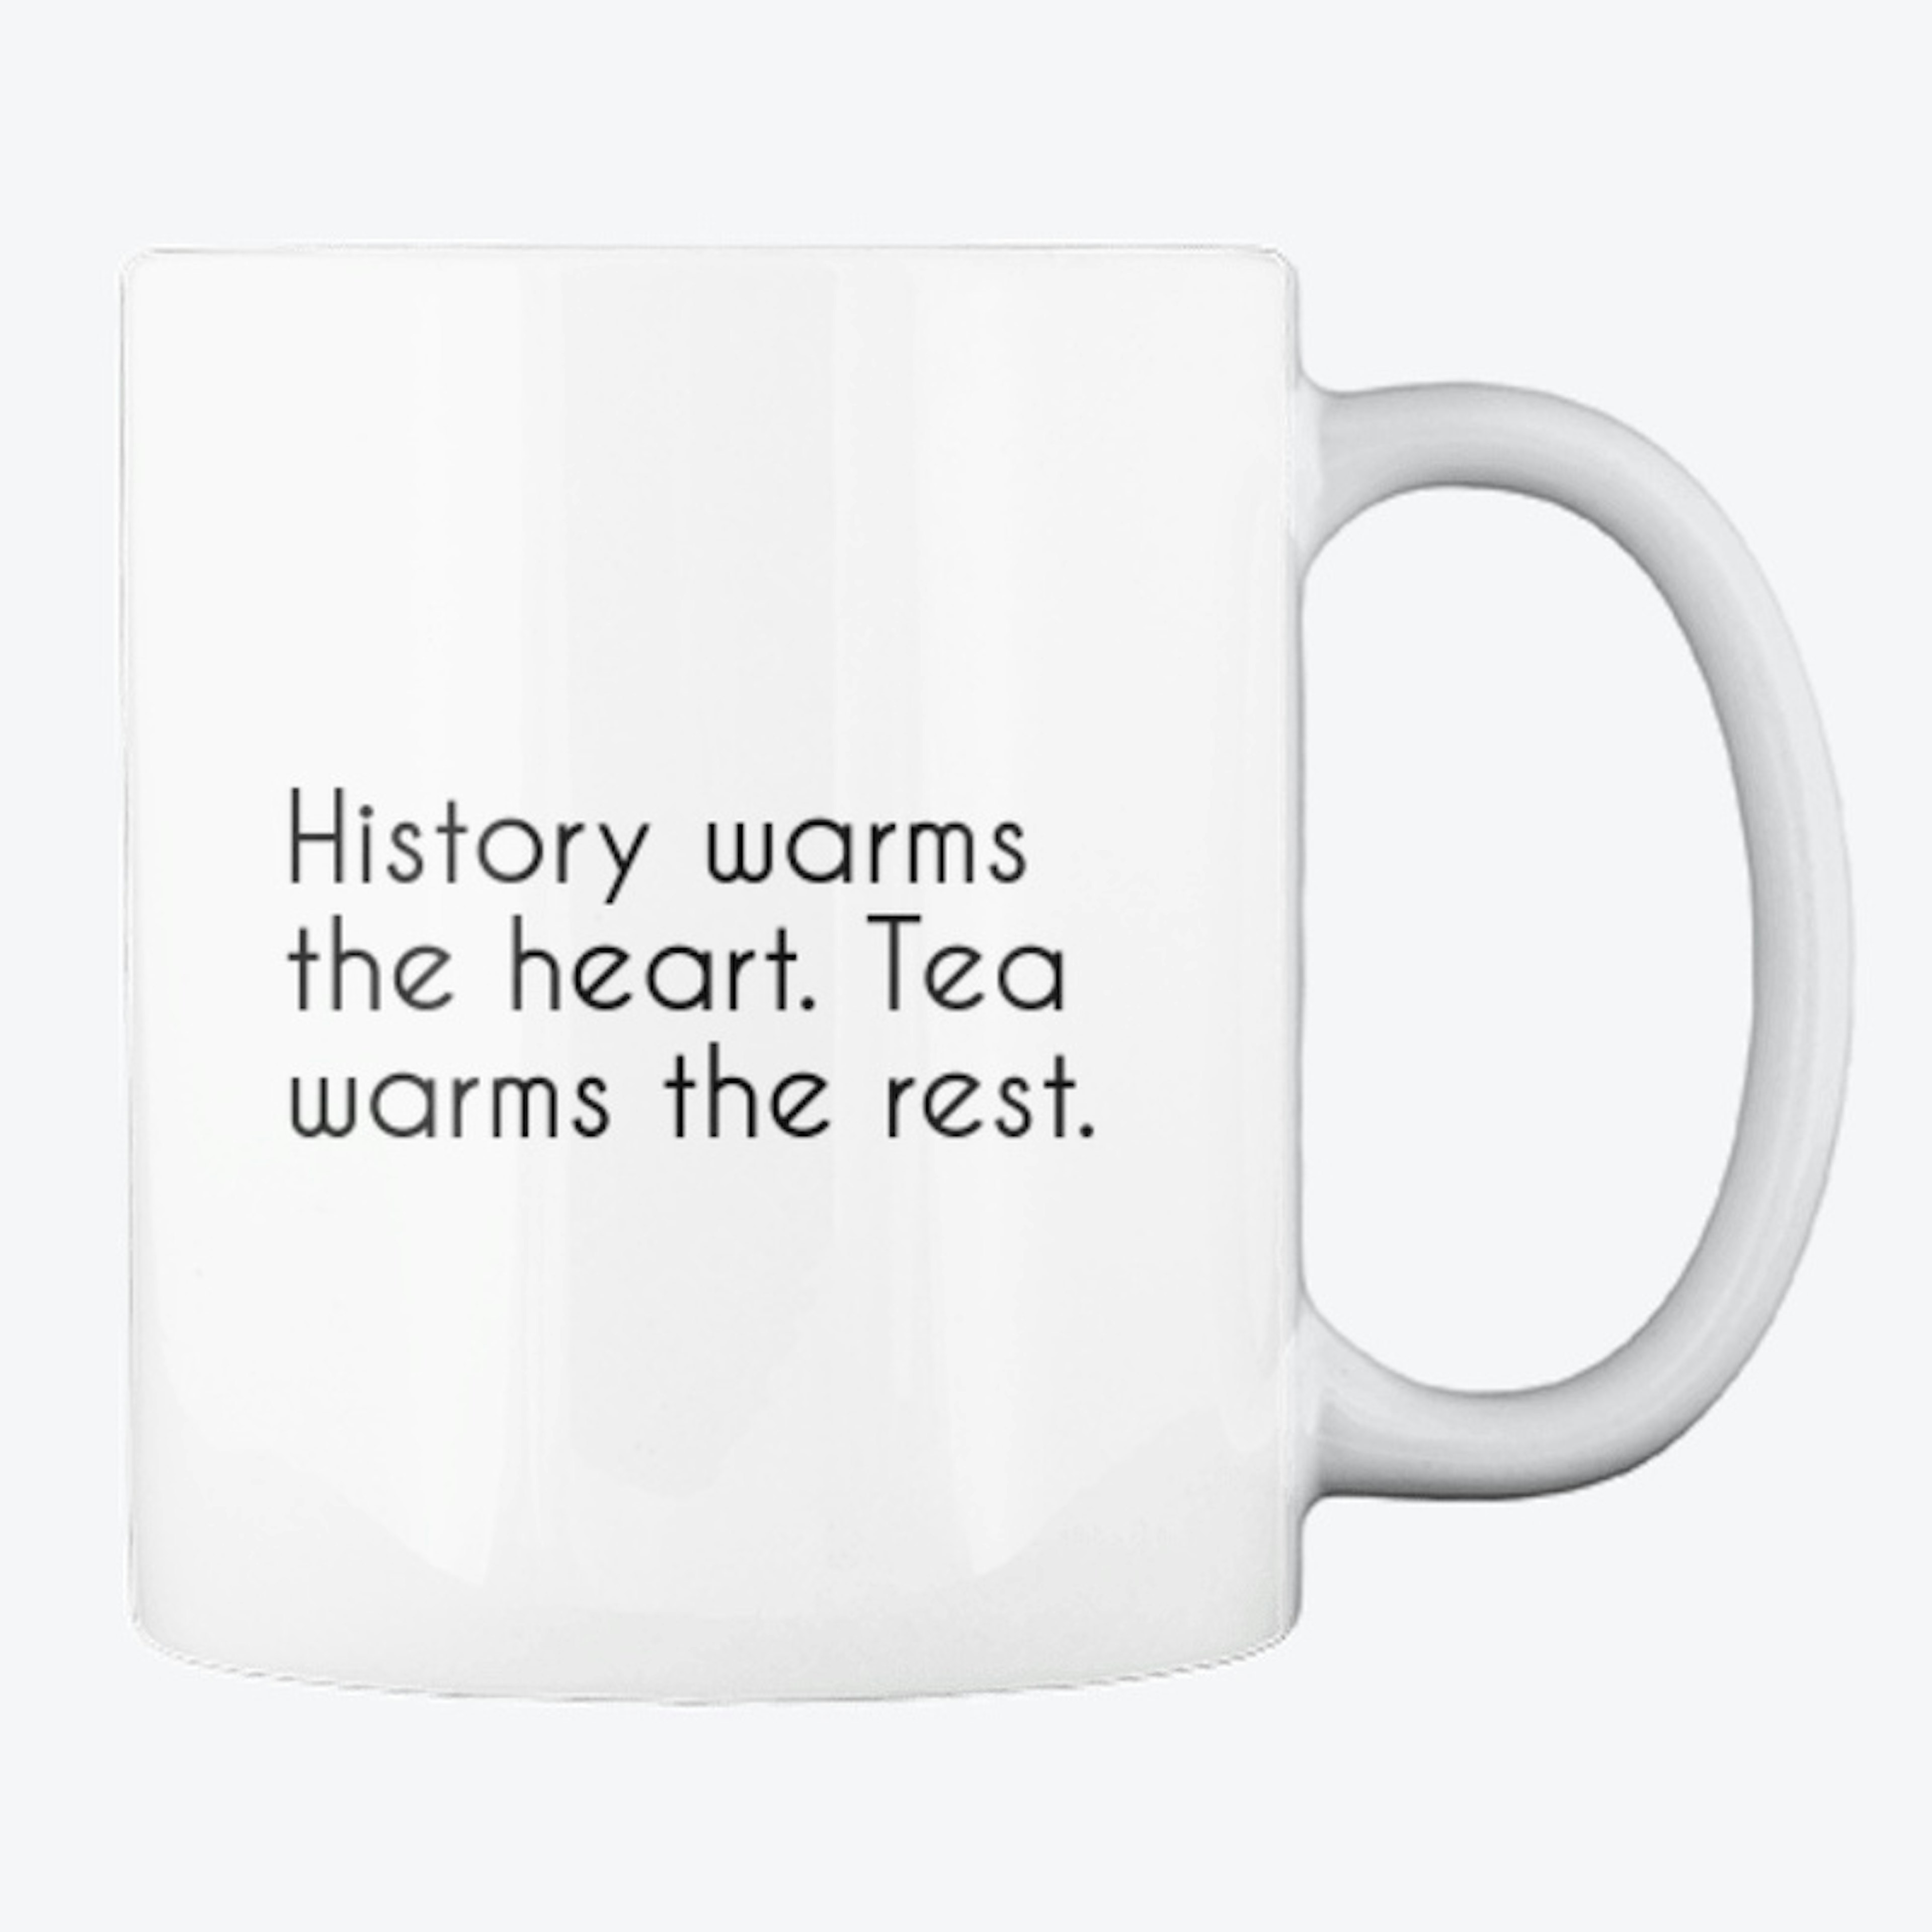 Stay warm! Tea and coffee mug.